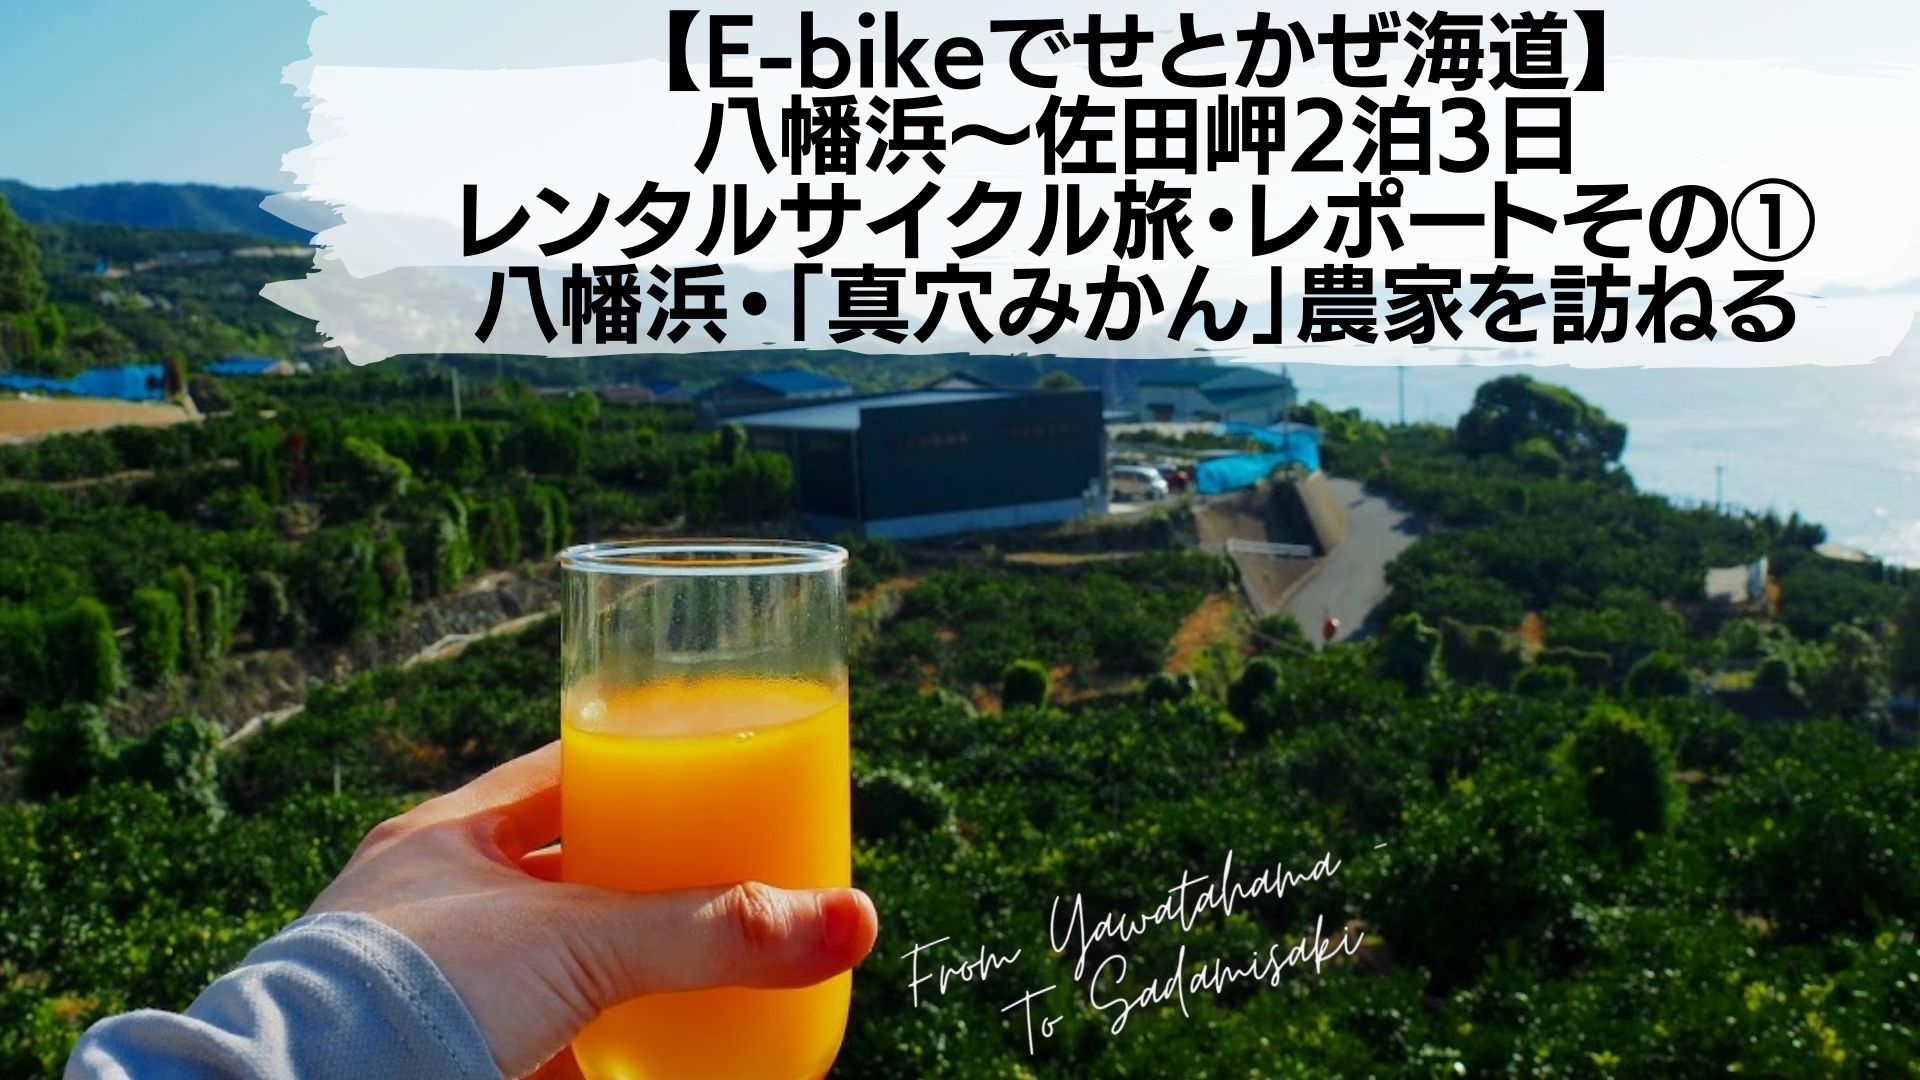 【E-bikeでせとかぜ海道】八幡浜〜佐田岬2泊3日のレンタルサイクル旅・レポートその①